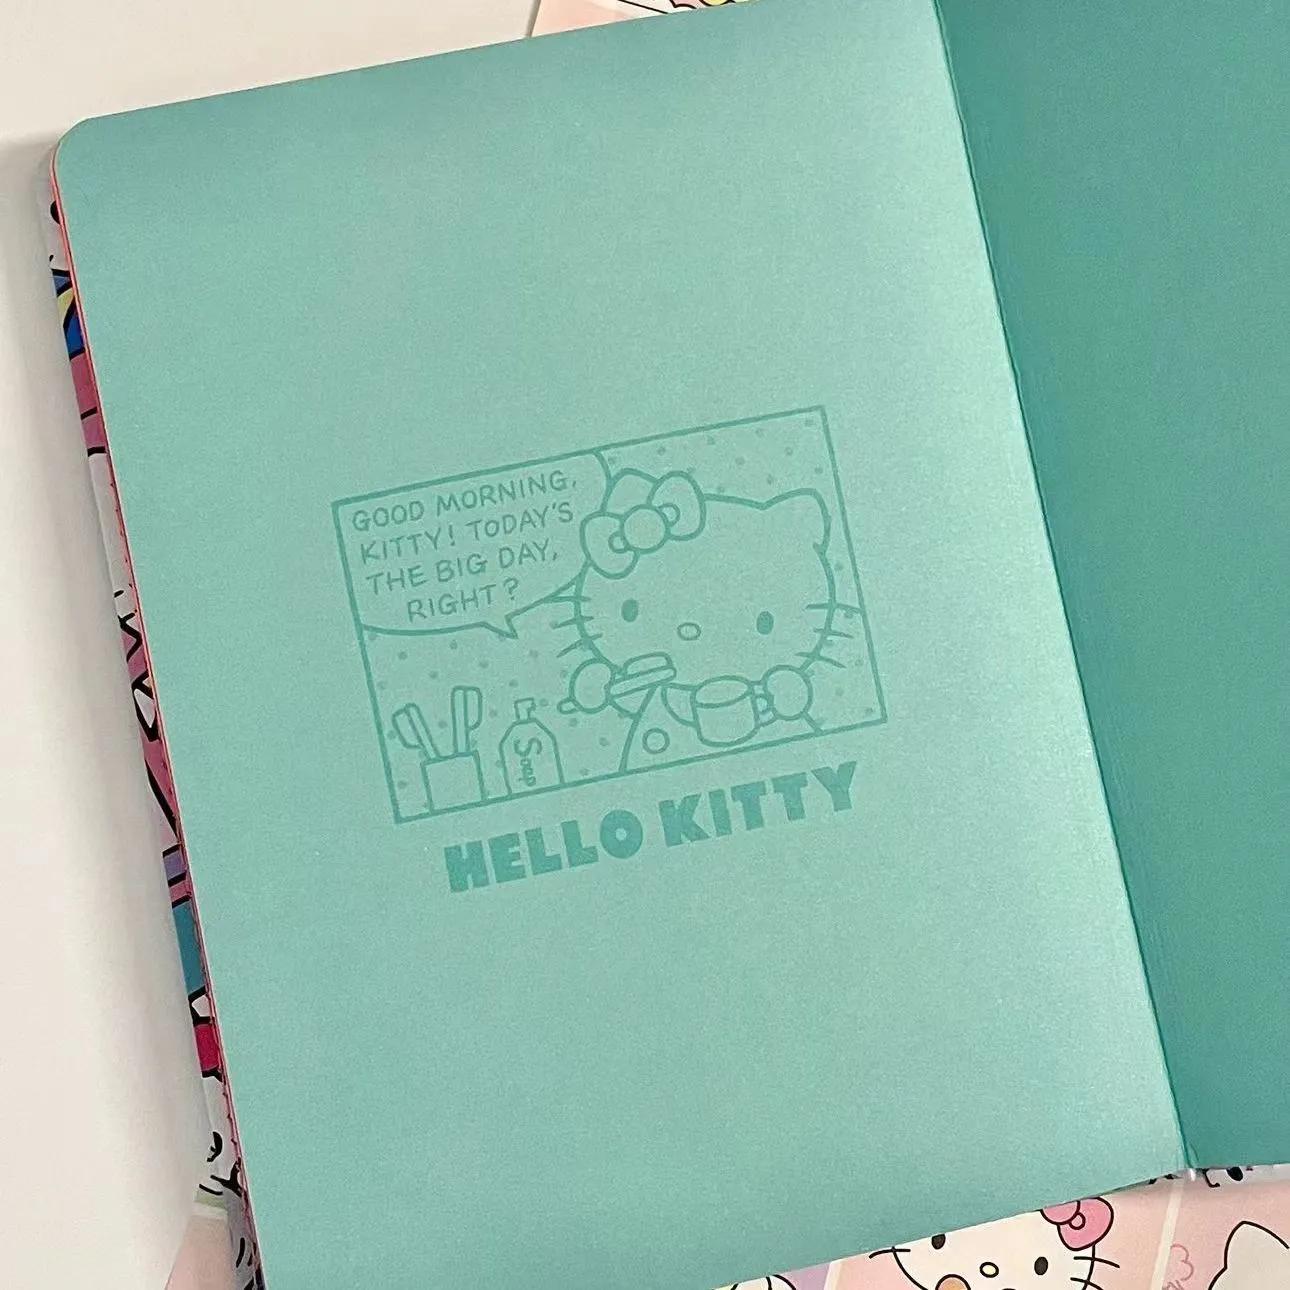 Kawaii Sanrio Notebook Set Cute Kuromi My Melody Cinnamoroll Cartoon  Hardbound Notebook Stationery Toys for Girls